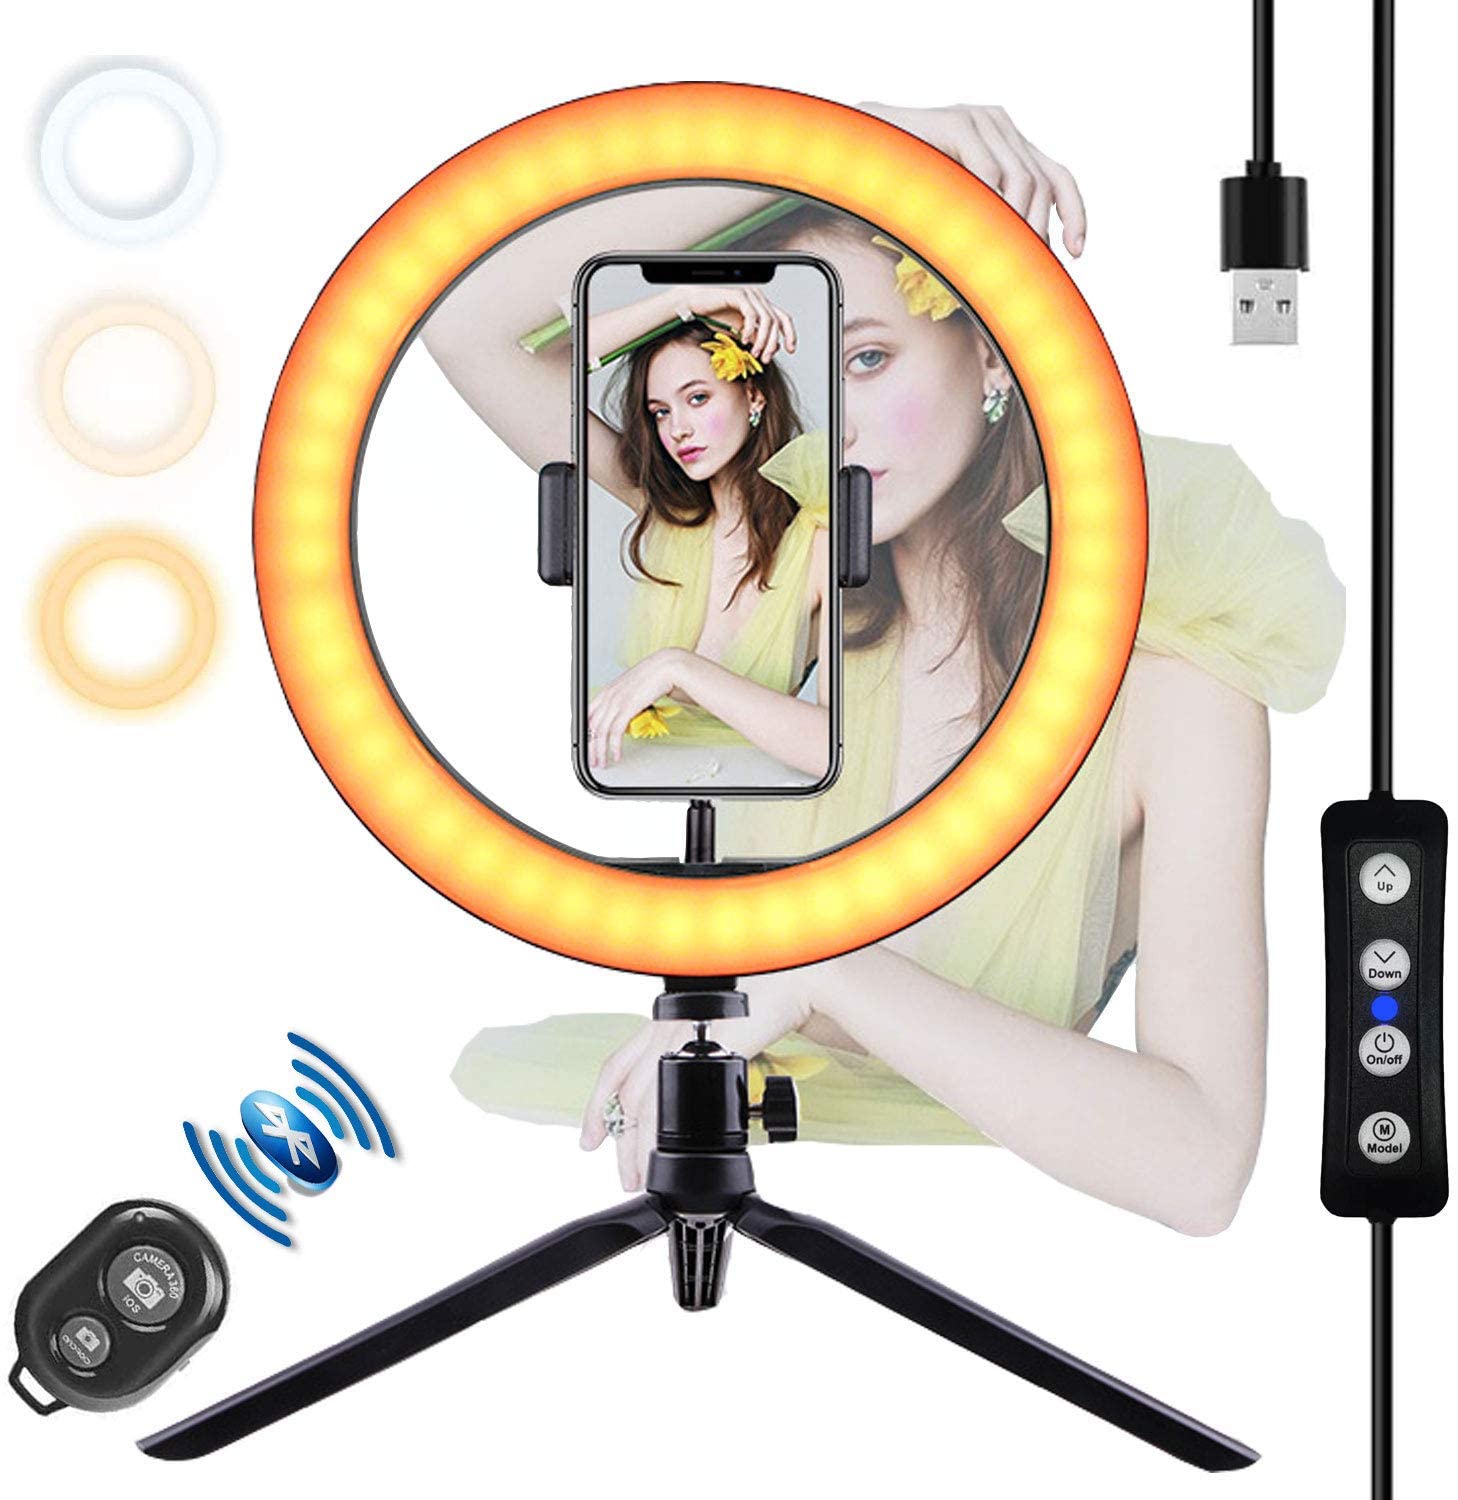 Anillo de luz Regulable para Maquillaje/Live Stream/Selfie/Youtube/Fotografía Compatible coniPhone/Androide Anillo de luz LED de 10  con trípode y Soporte para teléfono Dual Rosado 